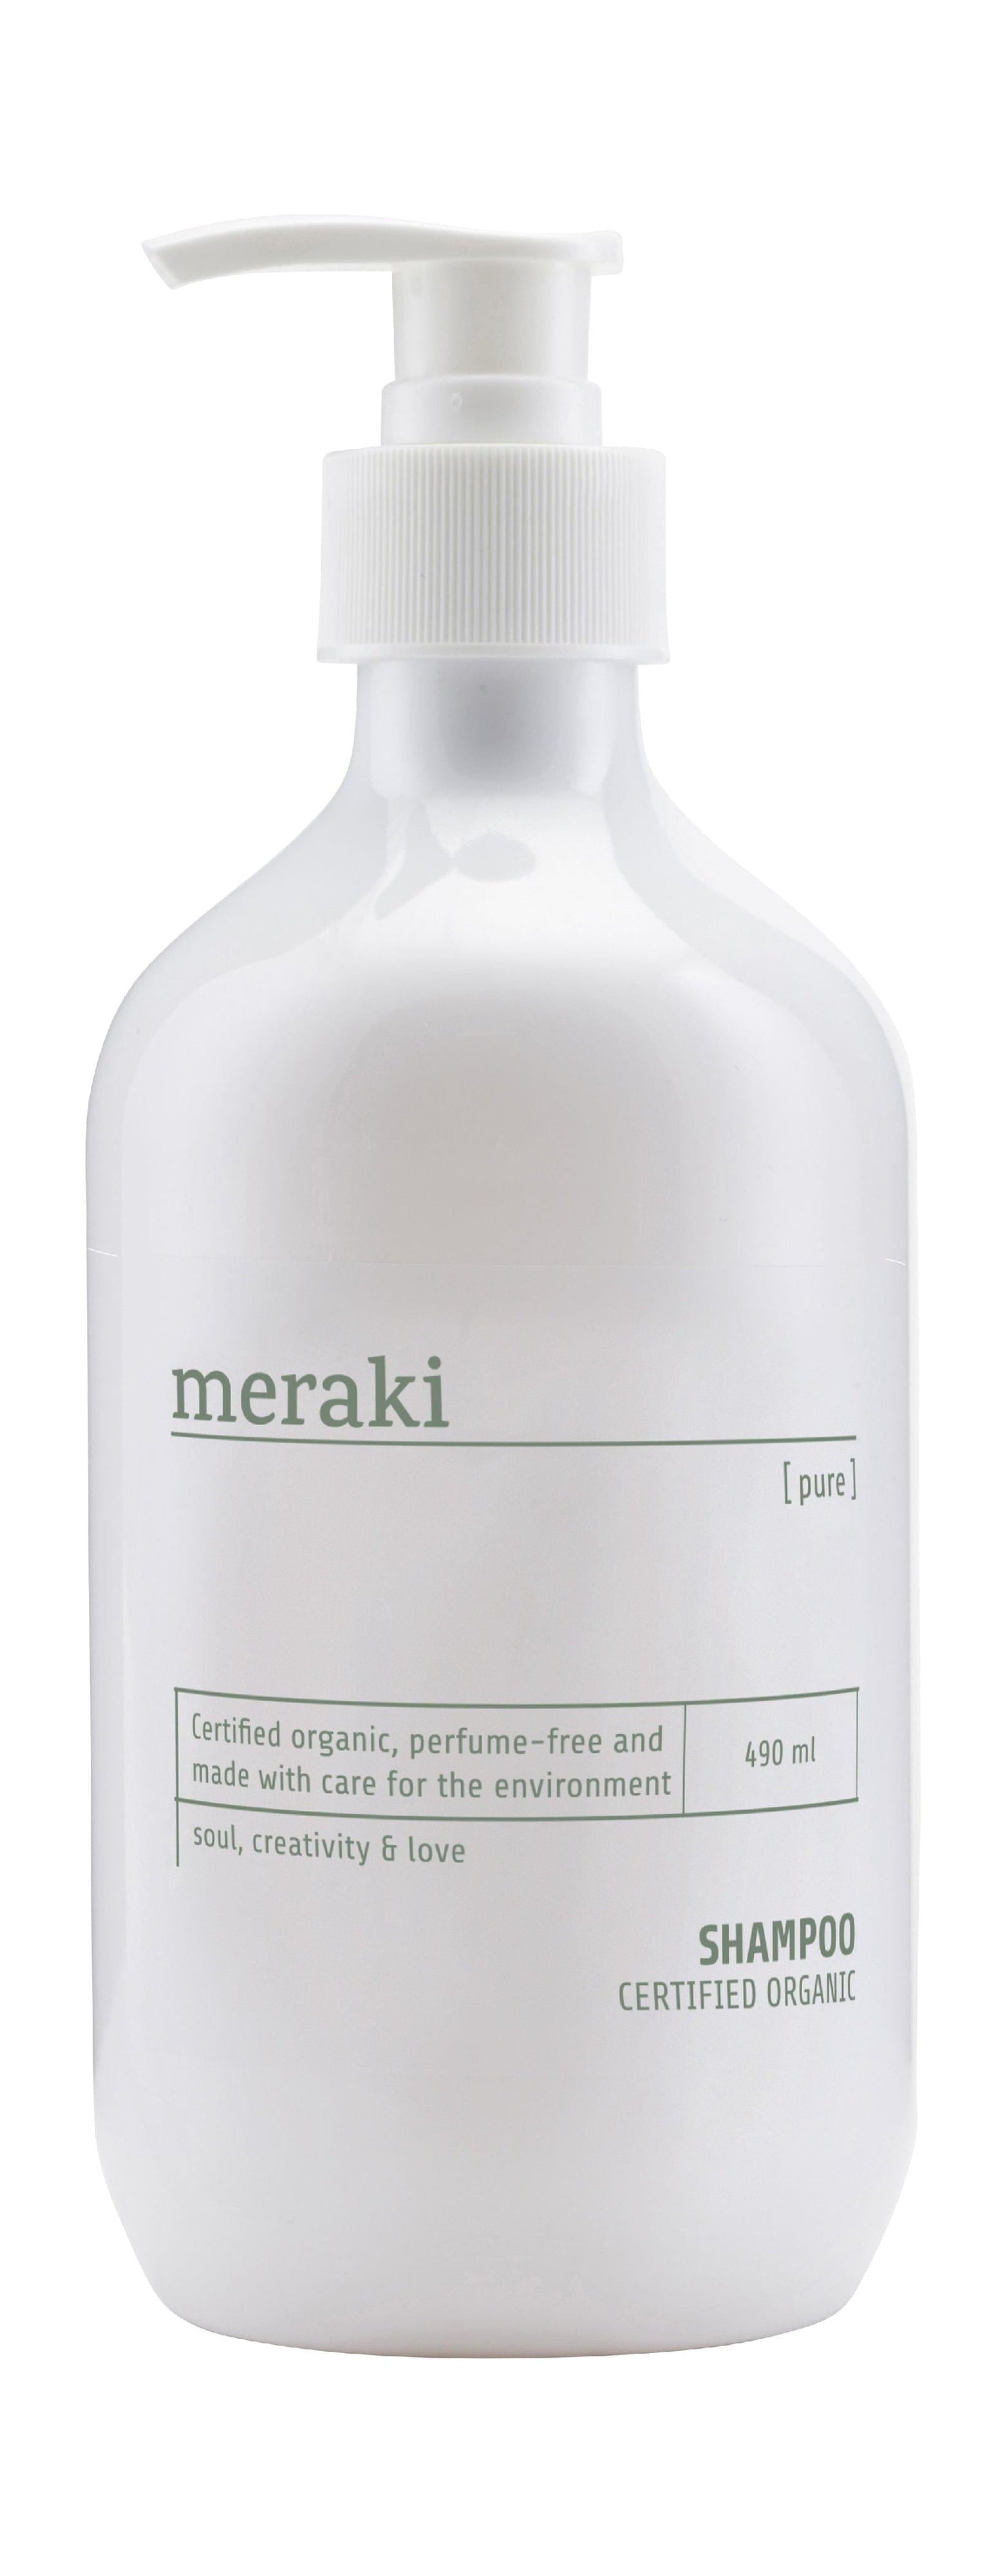 Meraki Shampoo 490 ml, Pure